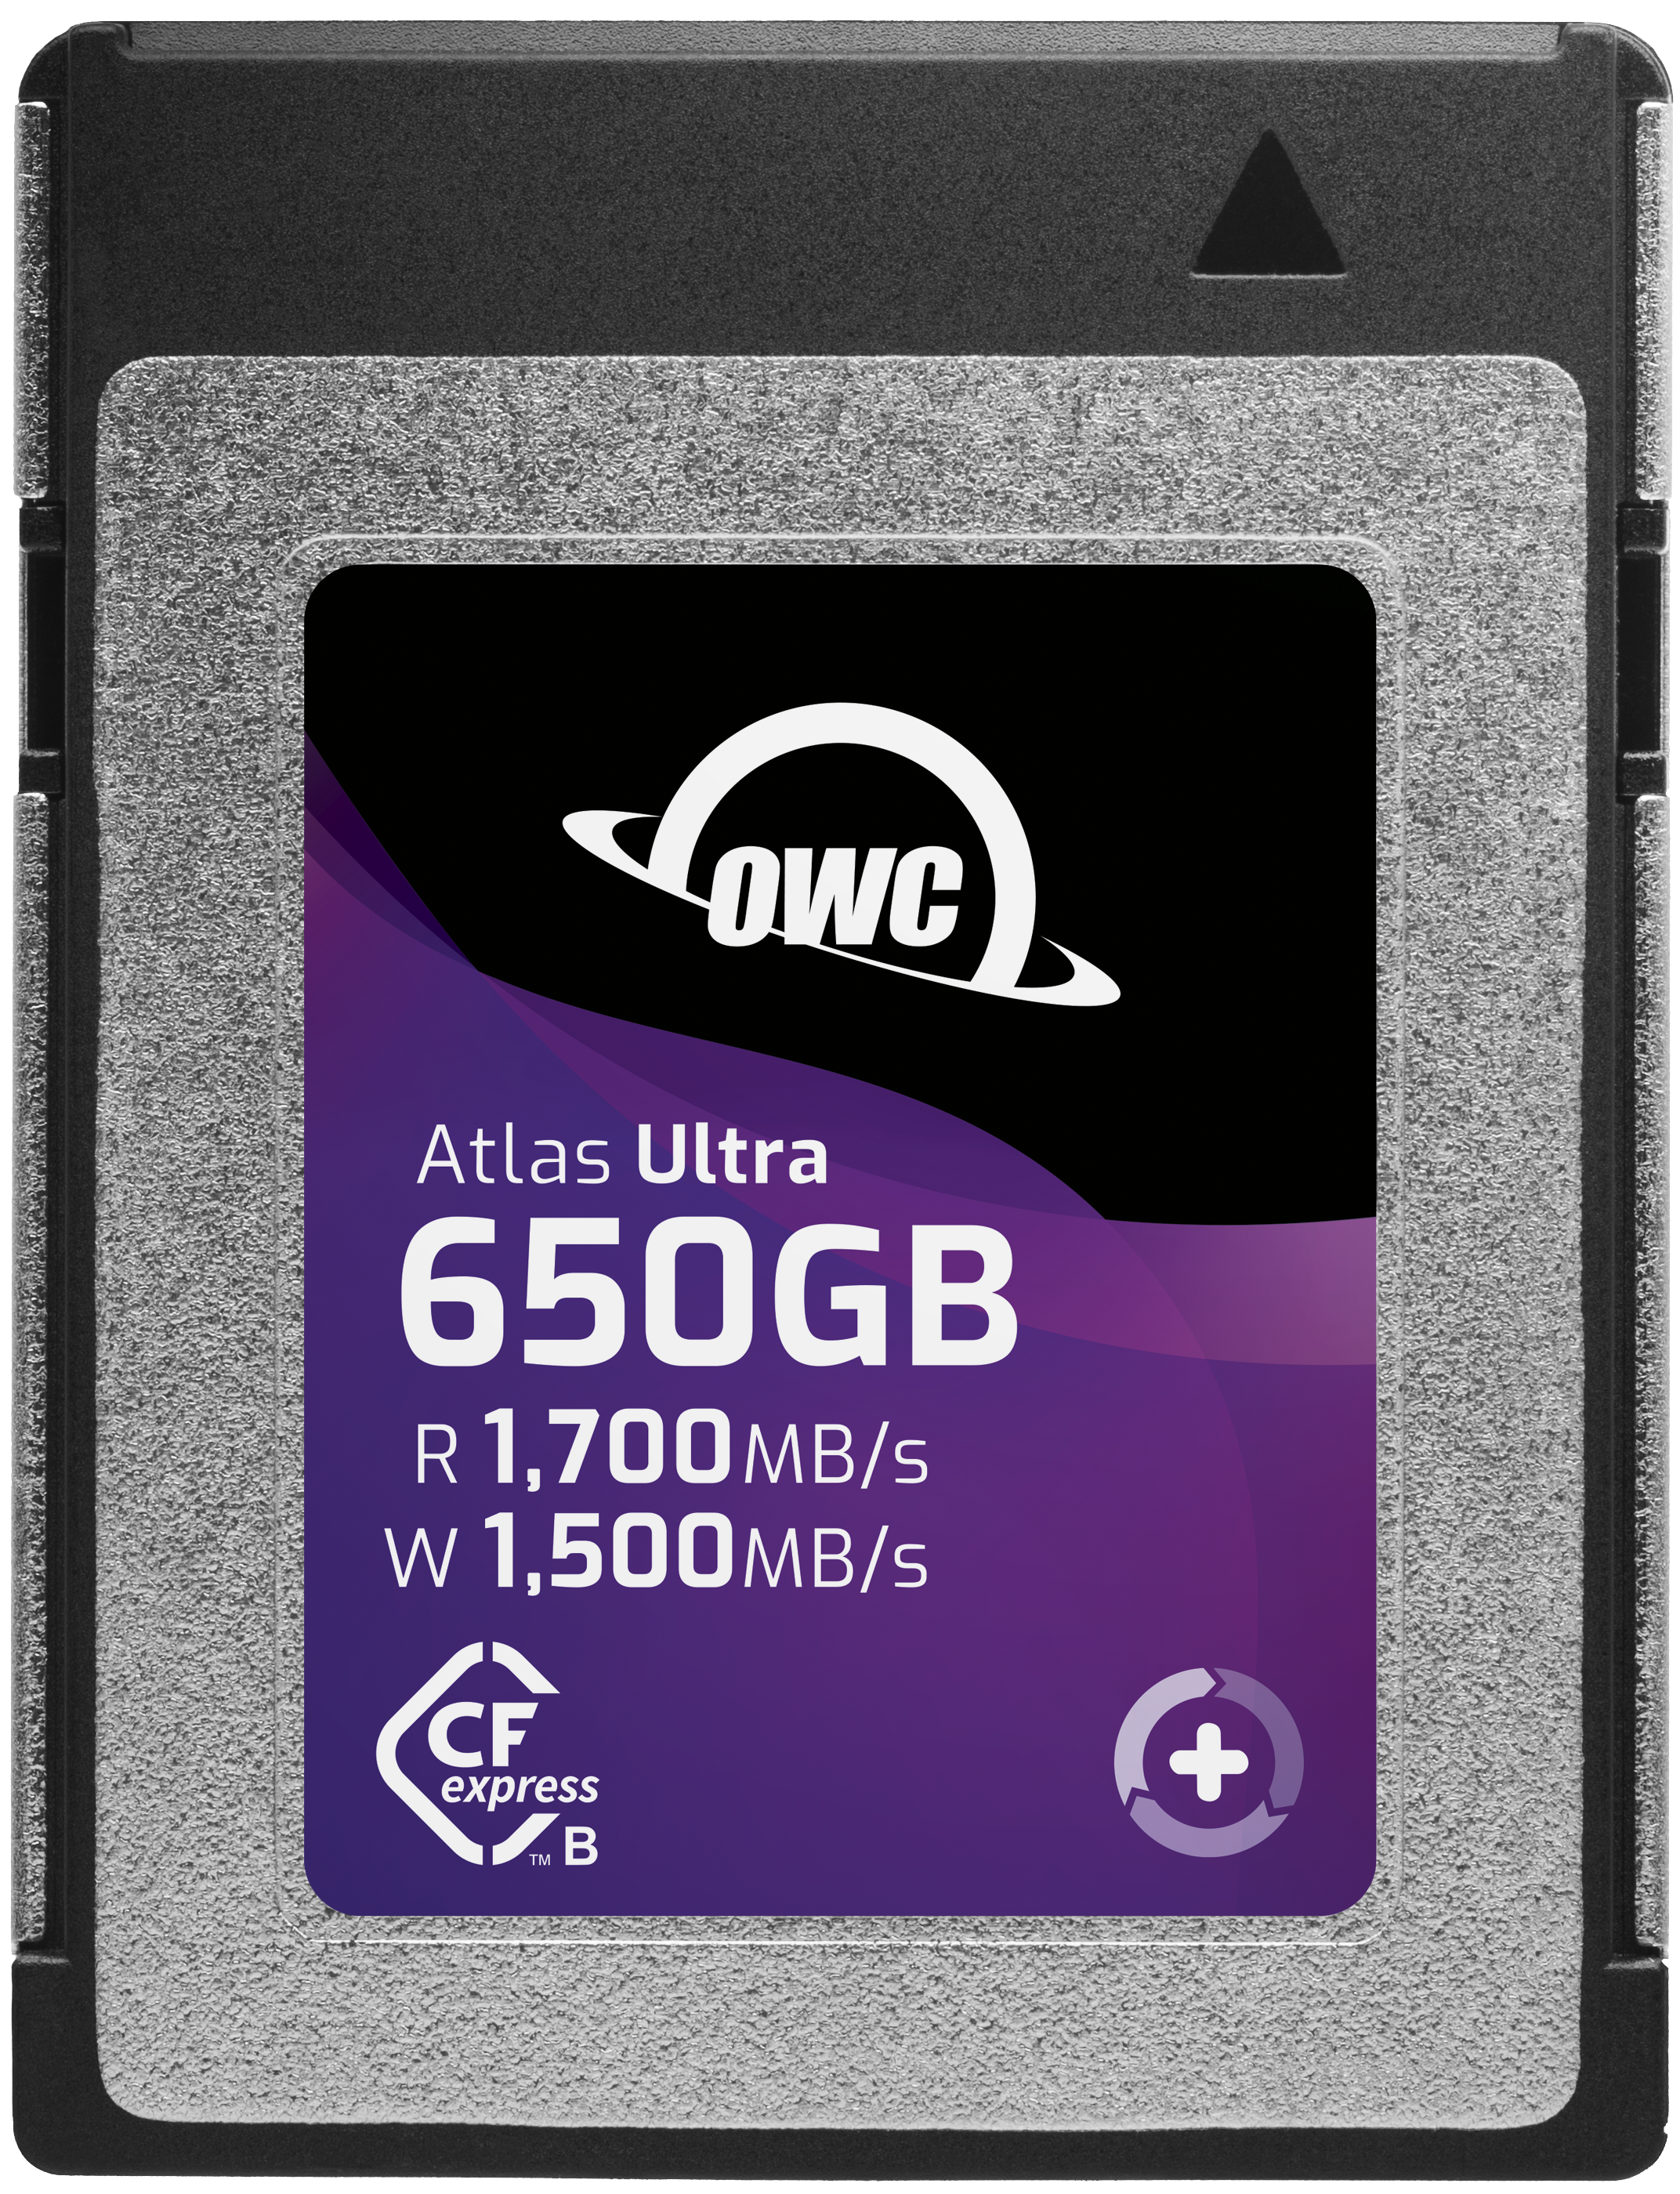 650GB OWC Atlas Ultra CFexpress Memory Card